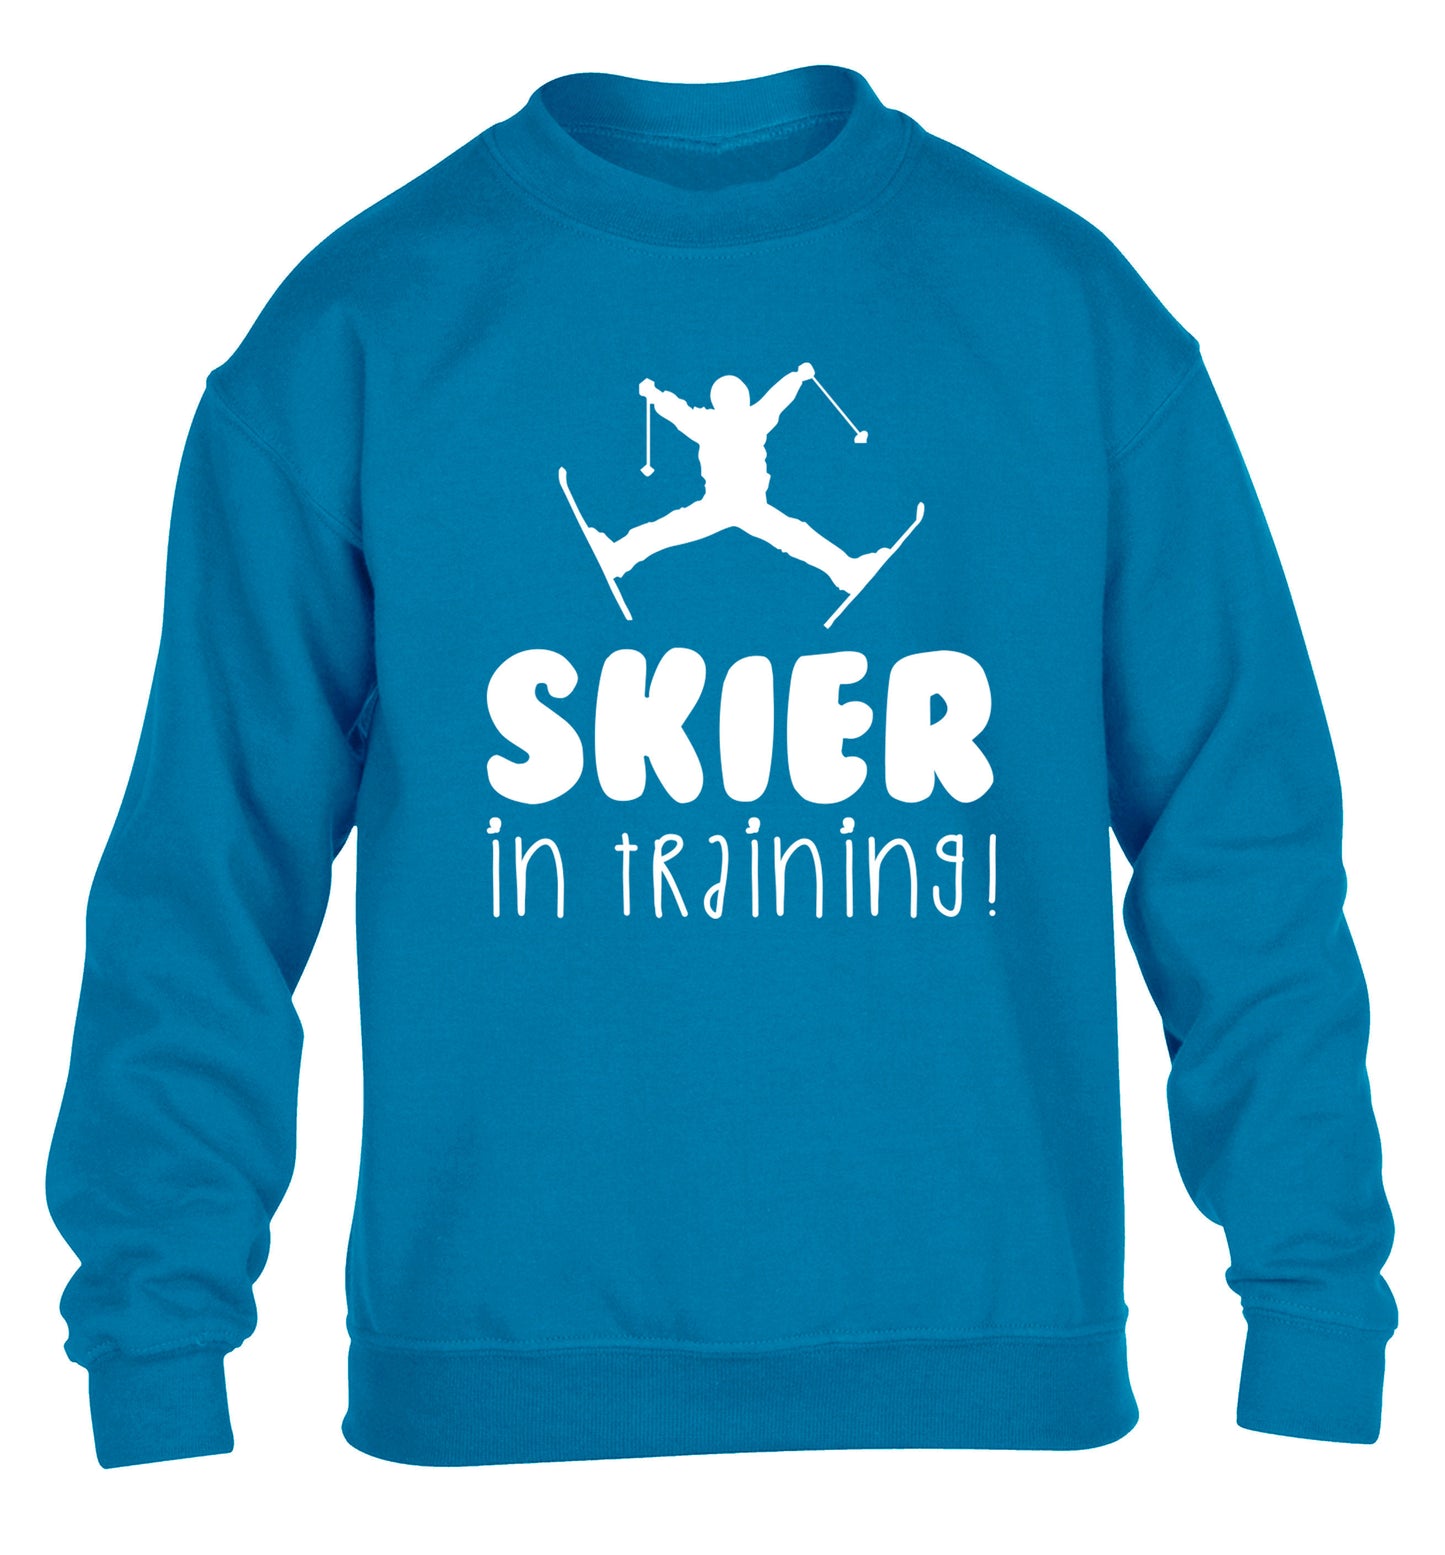 Skier in training children's blue sweater 12-14 Years